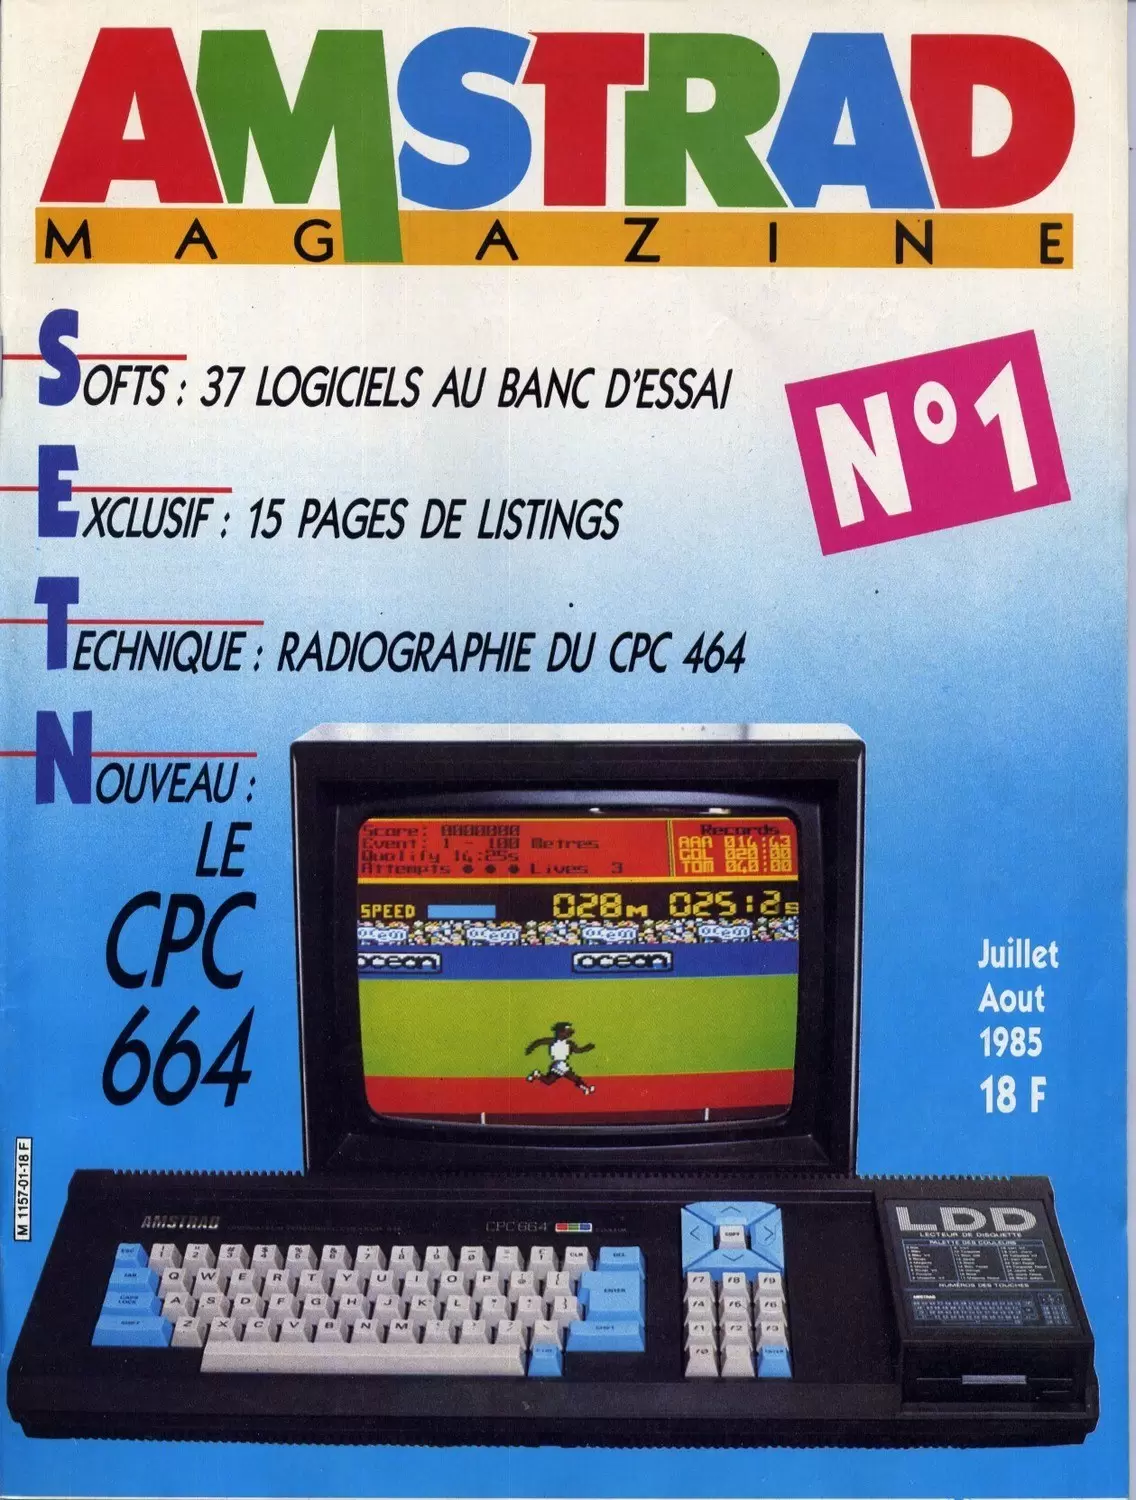 Amstrad Magazine - Amstrad Magazine n°1